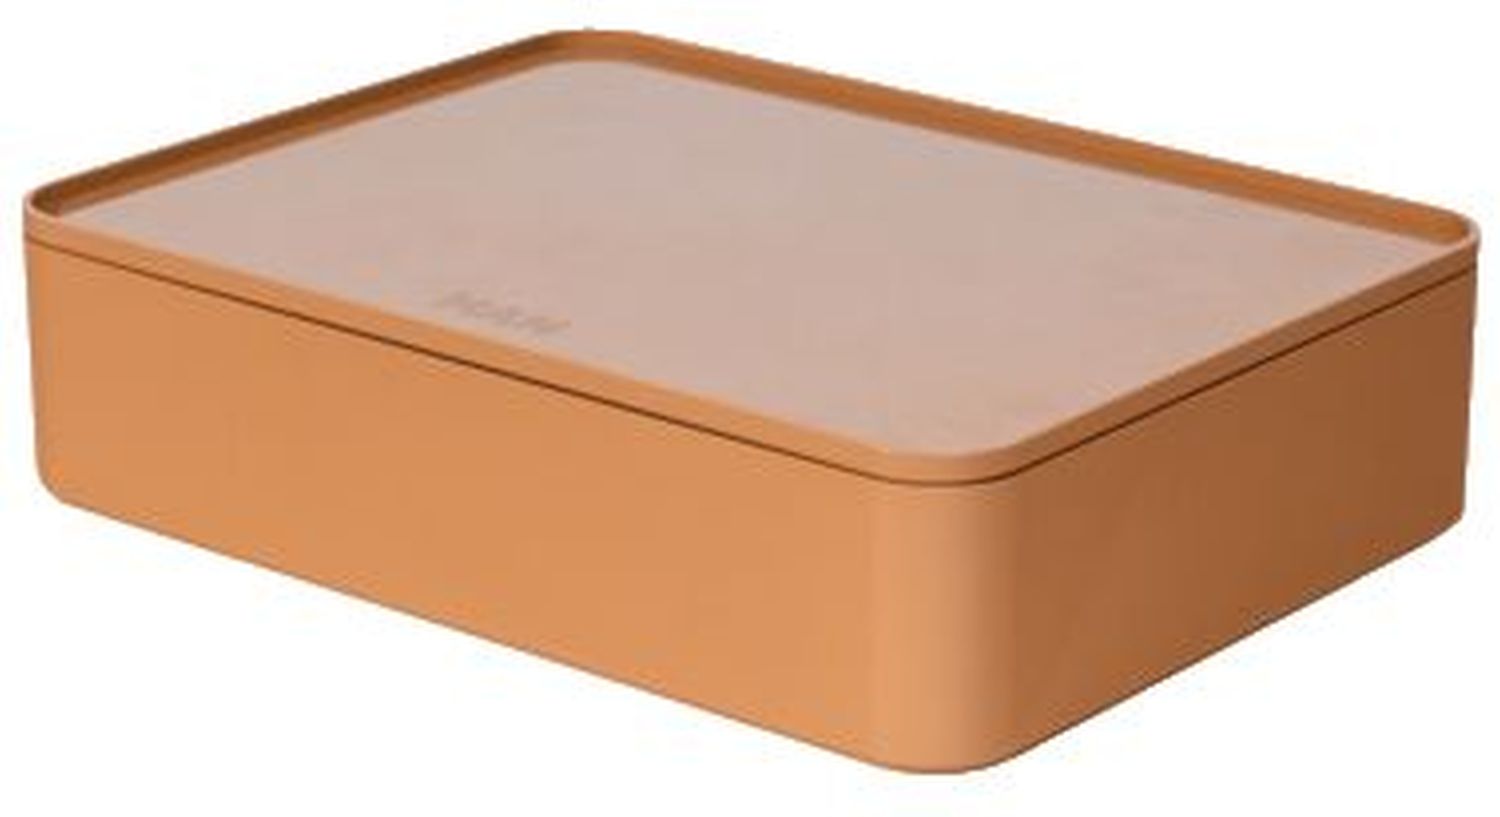 HAN 1110-83 Allison Utensilienbox +Deckel caramel-braun